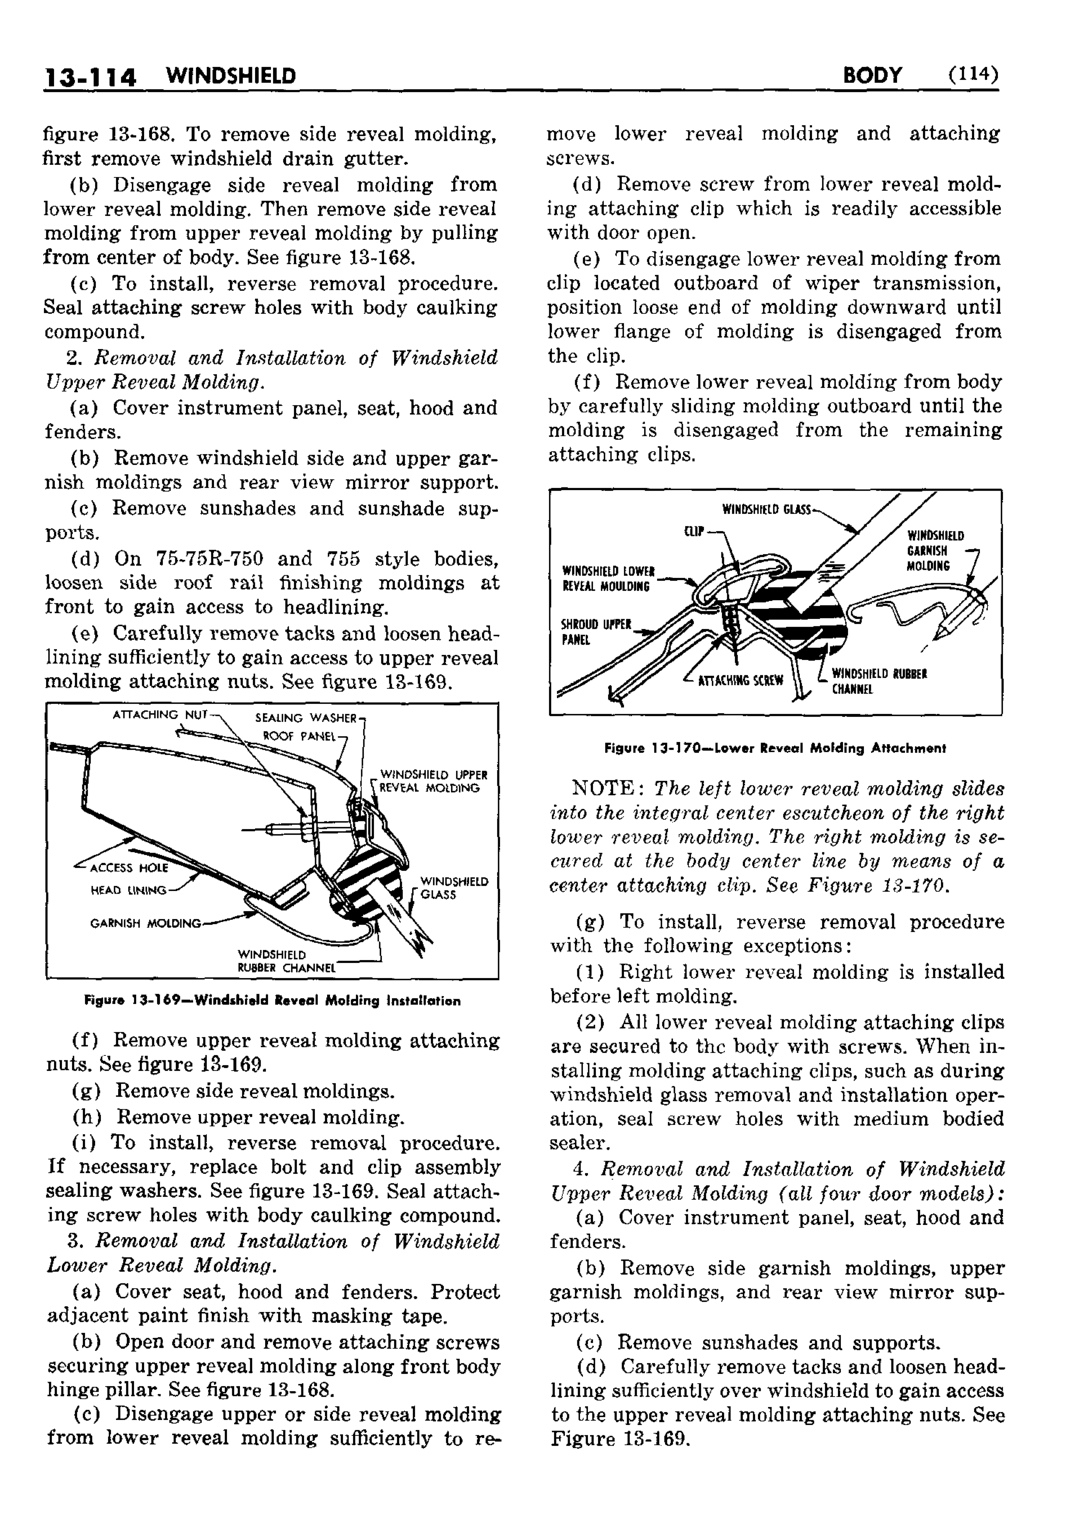 n_1958 Buick Body Service Manual-115-115.jpg